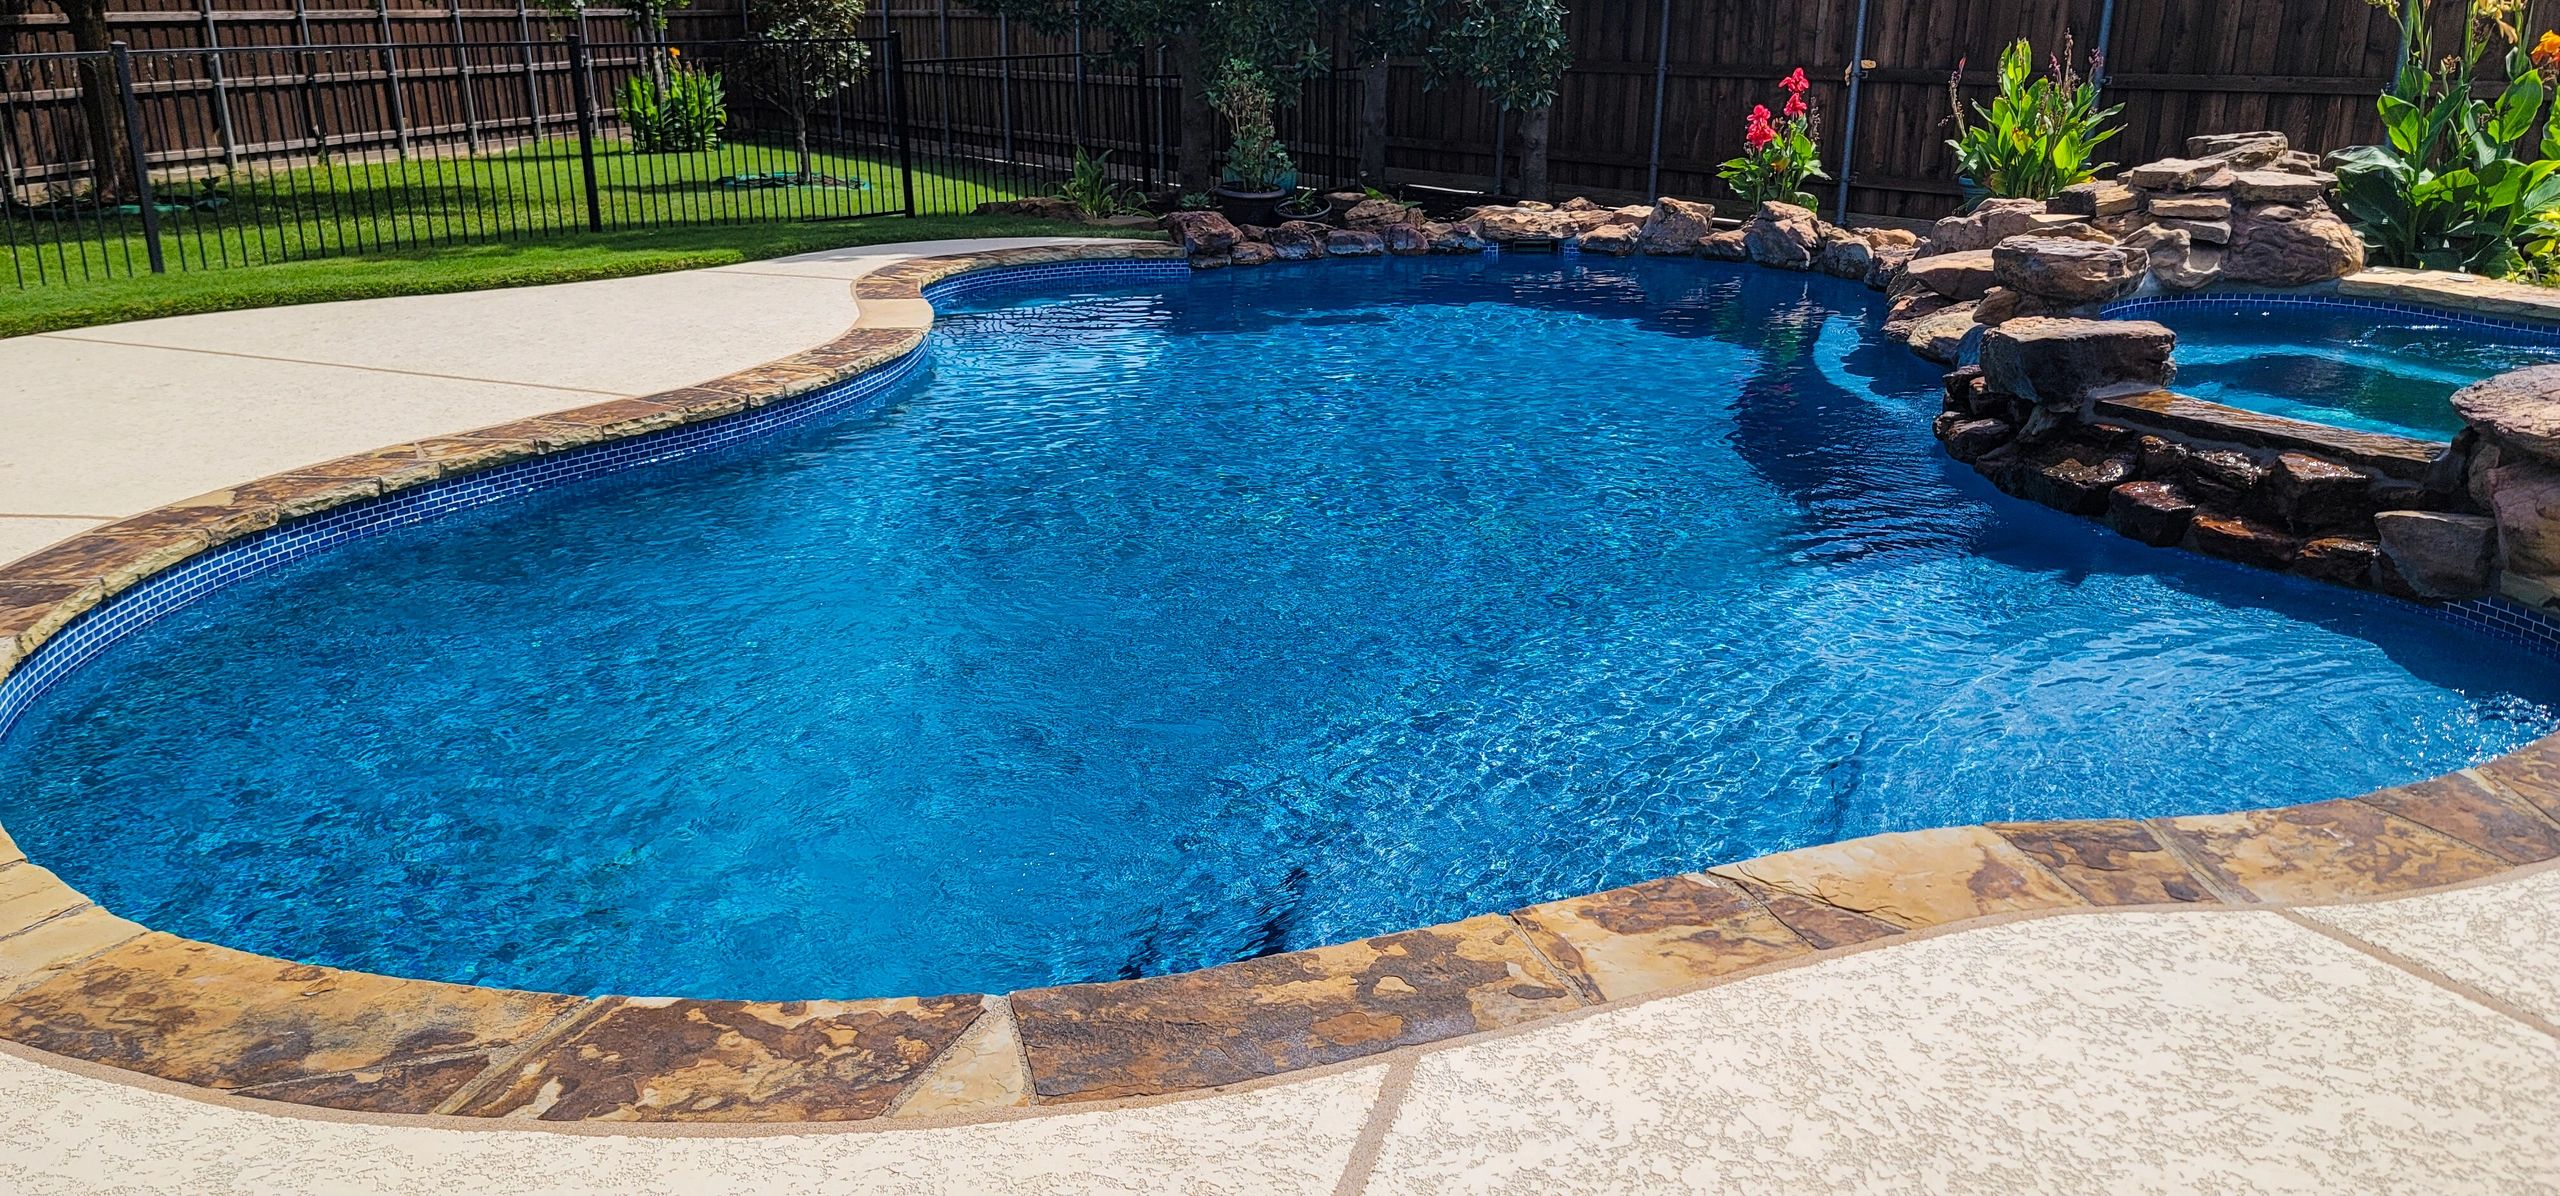 dallas richardson pool remodel 10 Dallas Pool Remodeling